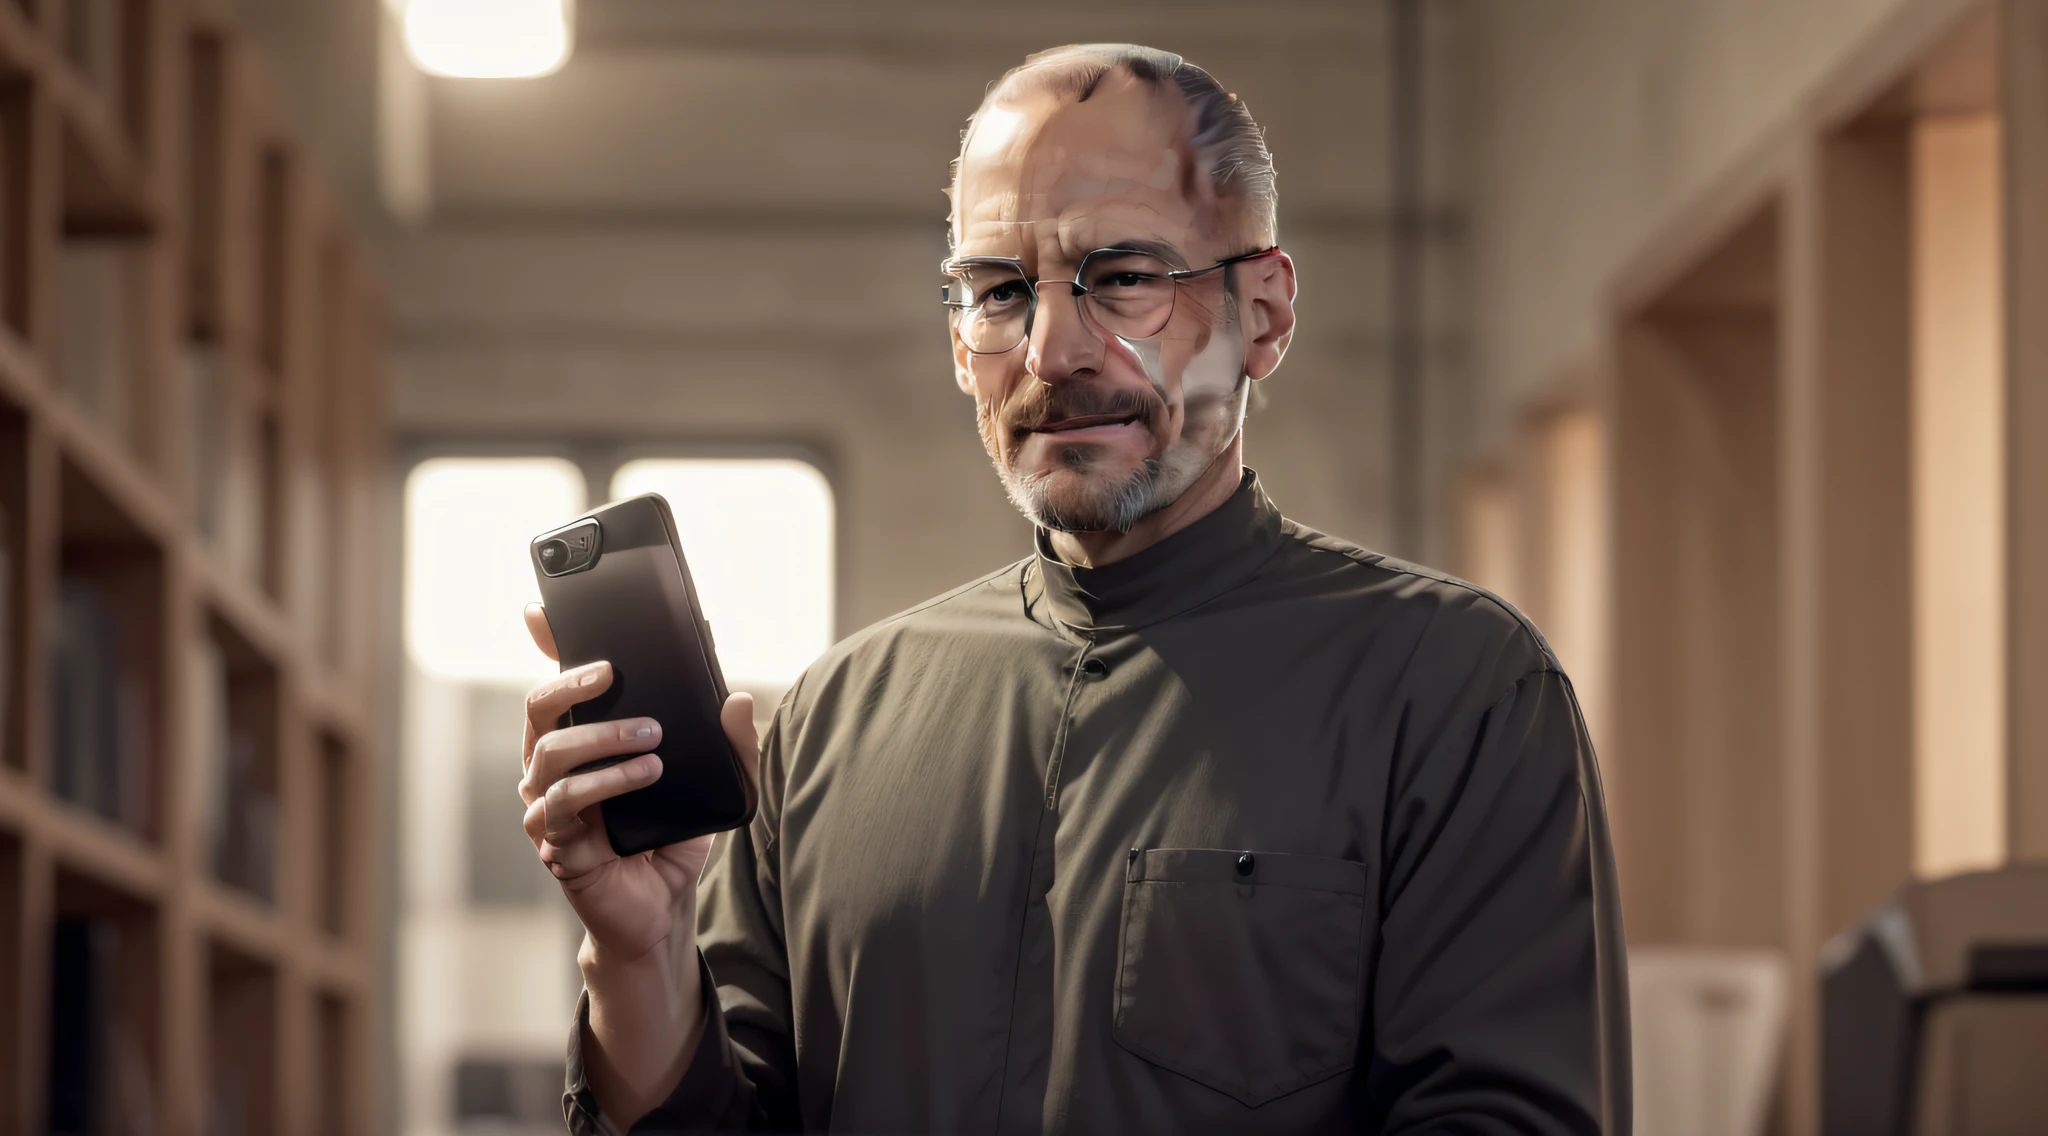 Steven Poul Jobs ถือโทรศัพท์มือถืออยู่ในมือ, แว่นตา, หนวดเครา, แอปเปิล, แอปเปิล Phone, ไอโฟน, แอปเปิล Cell Phone, ยิ้มอย่างมั่นใจ, พิราดอร์,